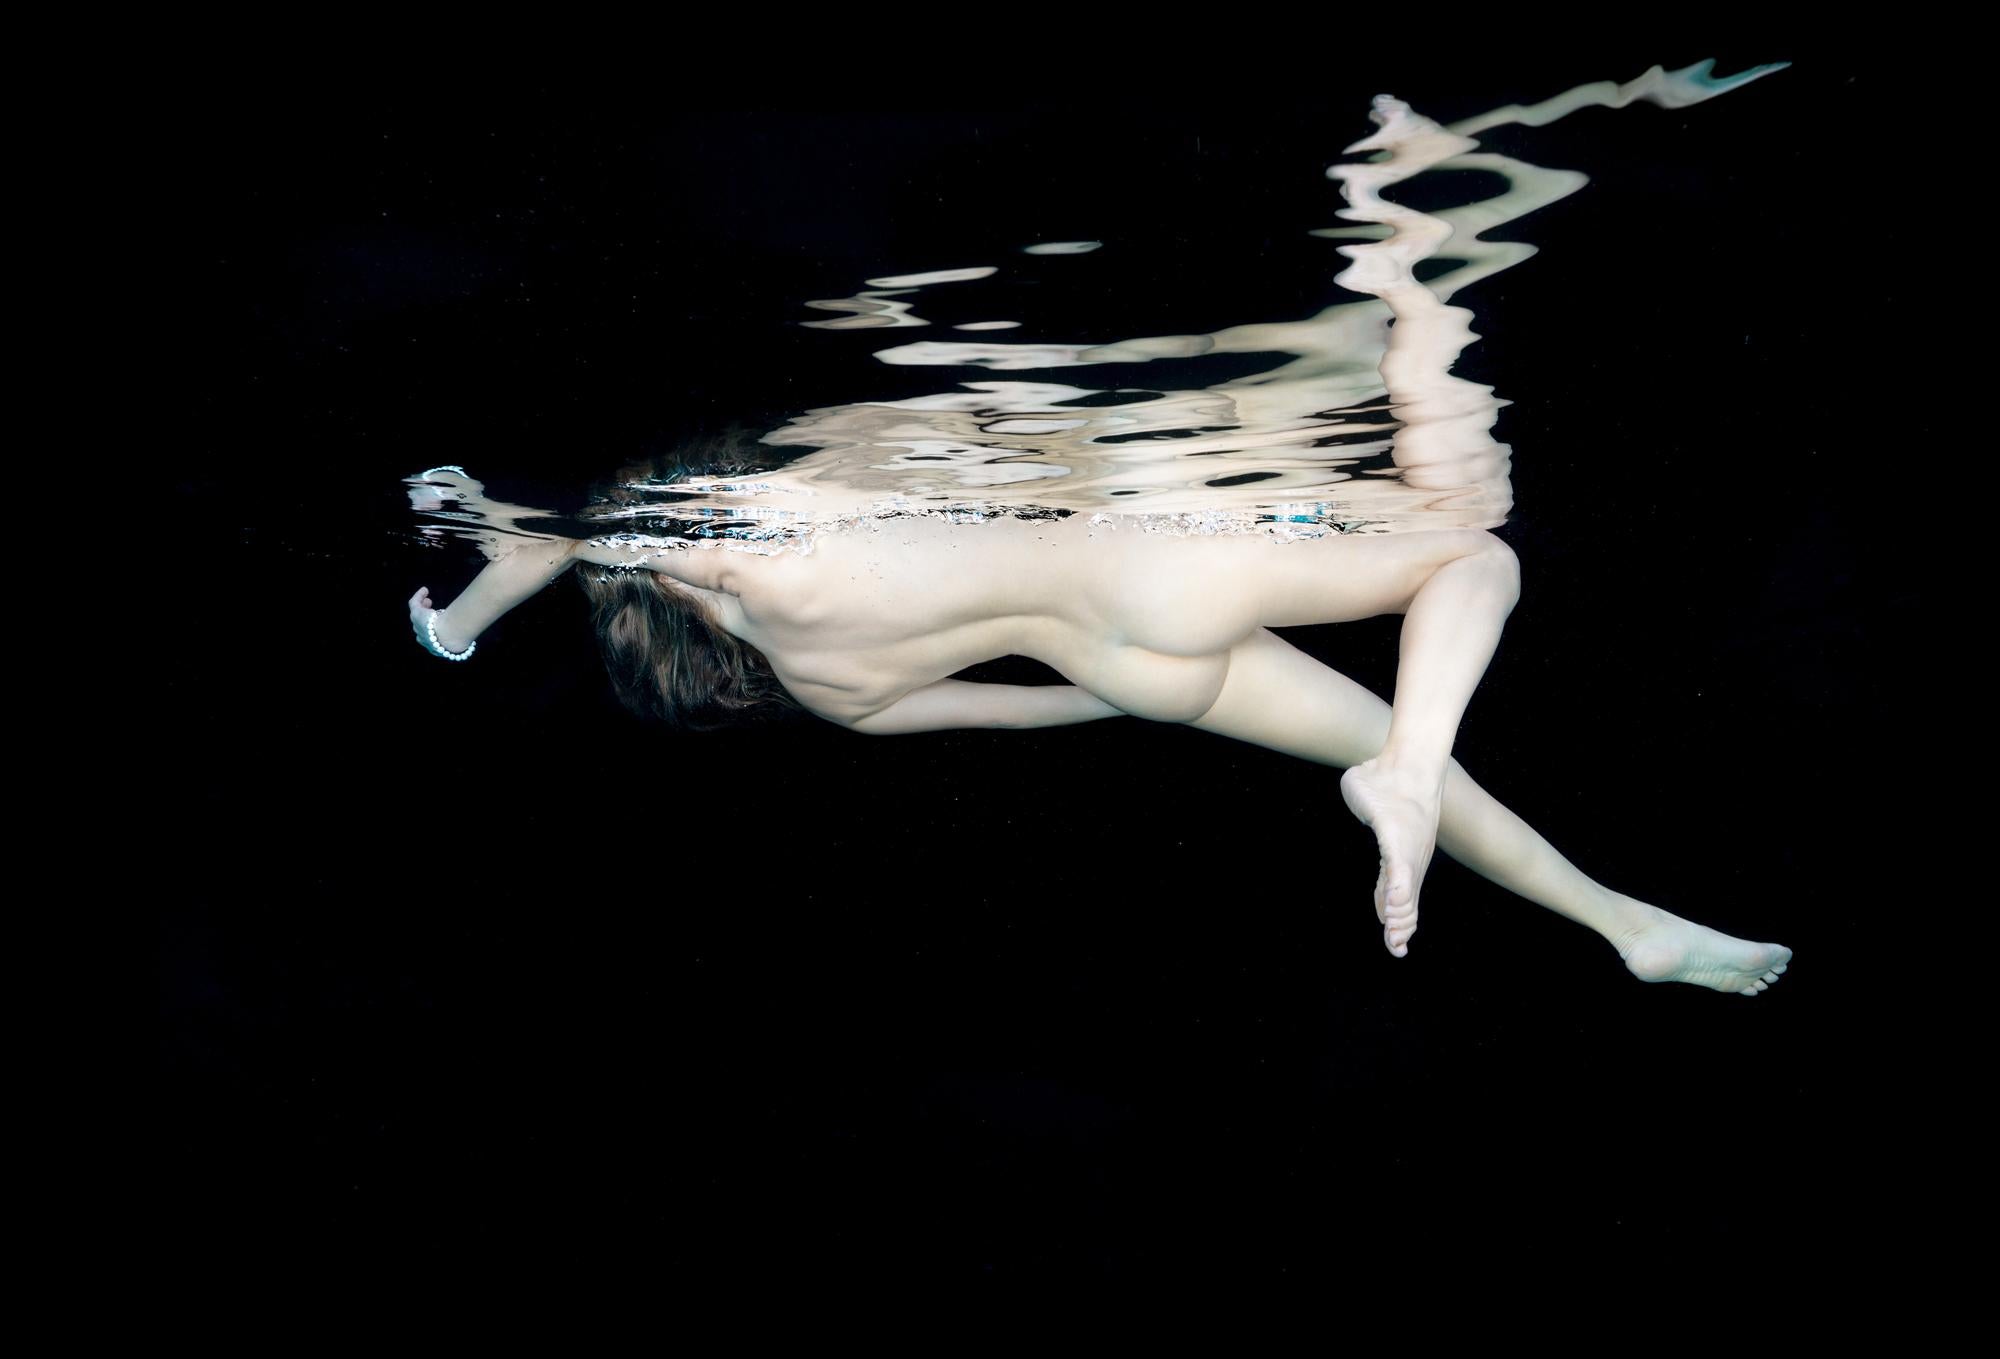 Porcelain II  - underwater nude photograph - archival pigment print 43x64"